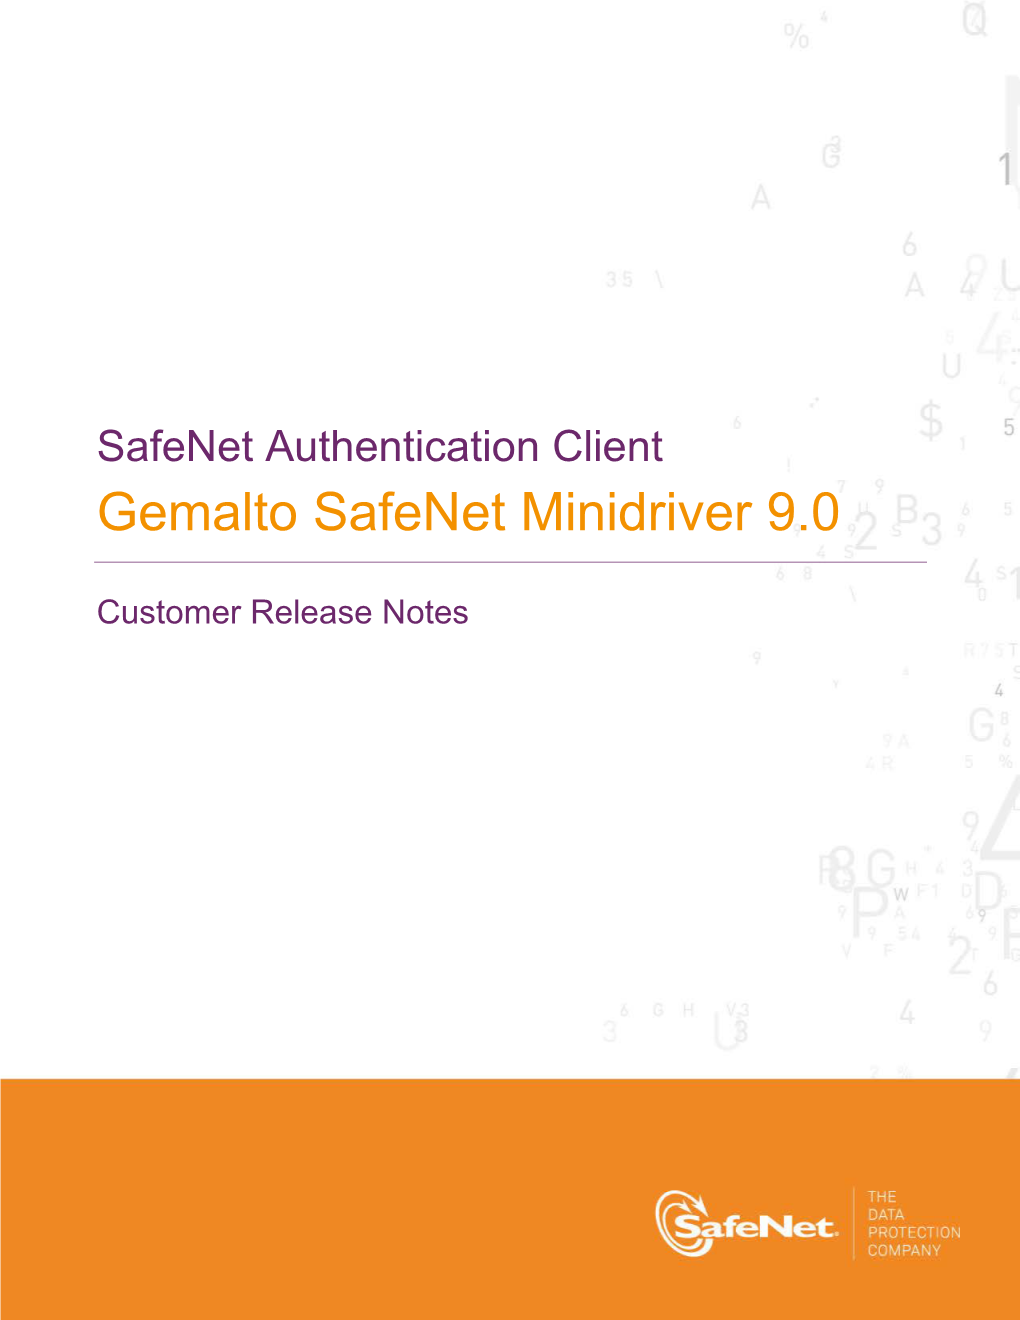 Gemalto Safenet Minidriver 9.0